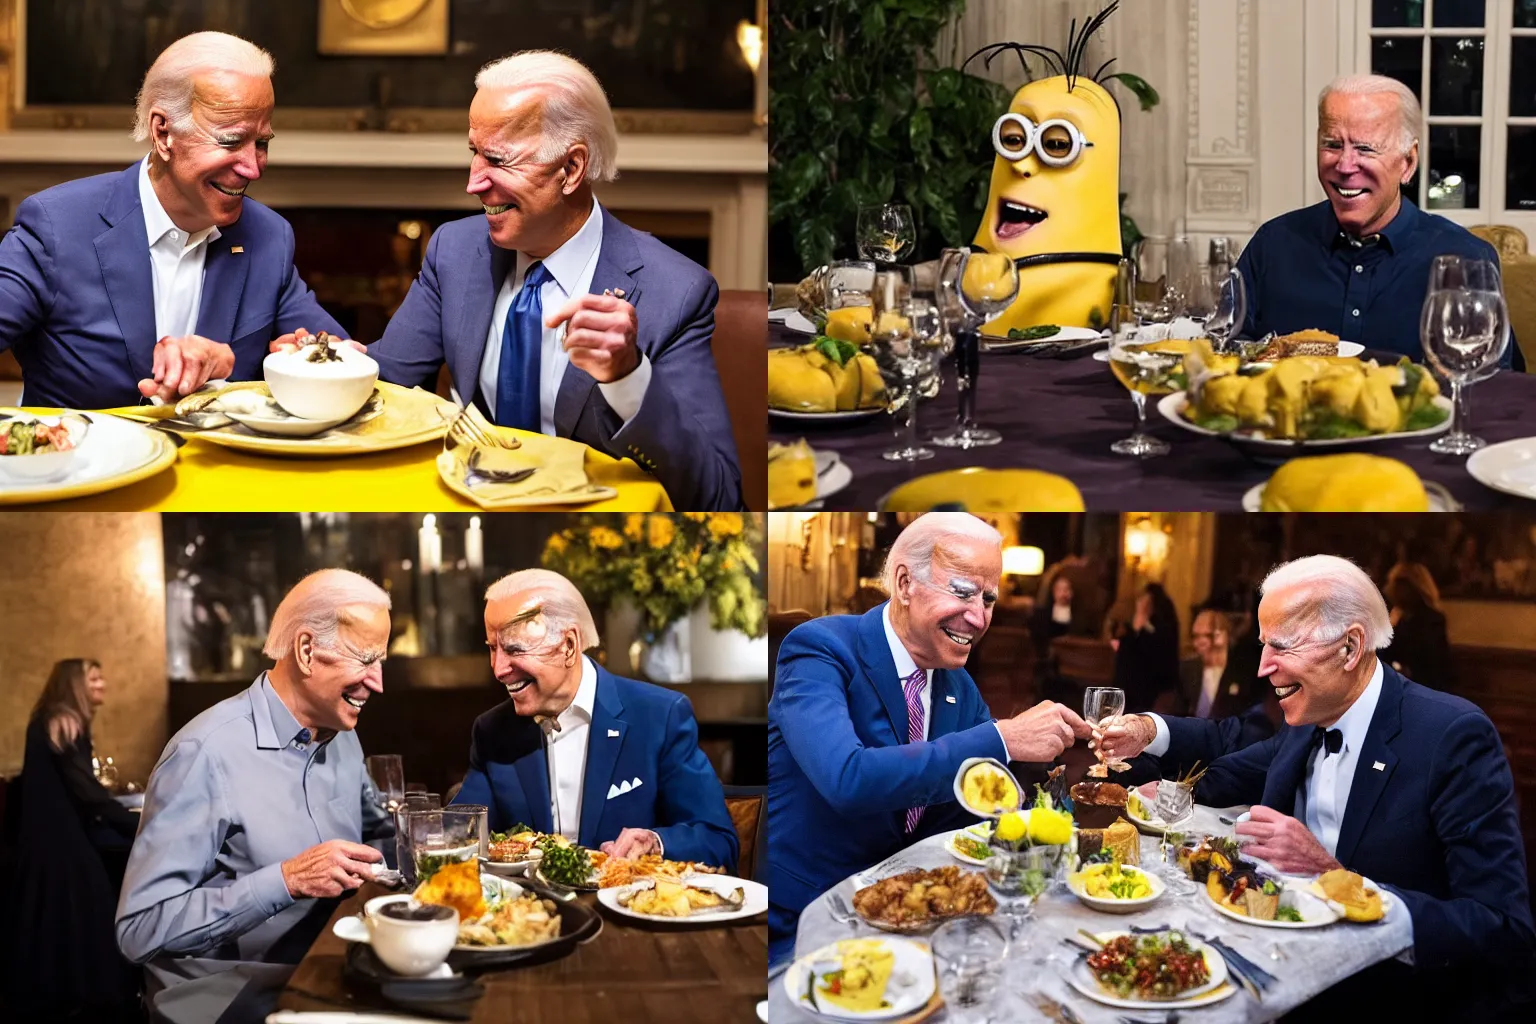 Prompt: Joe Biden having a lovely dinner with Gru from the minions, award winning photo, 4k